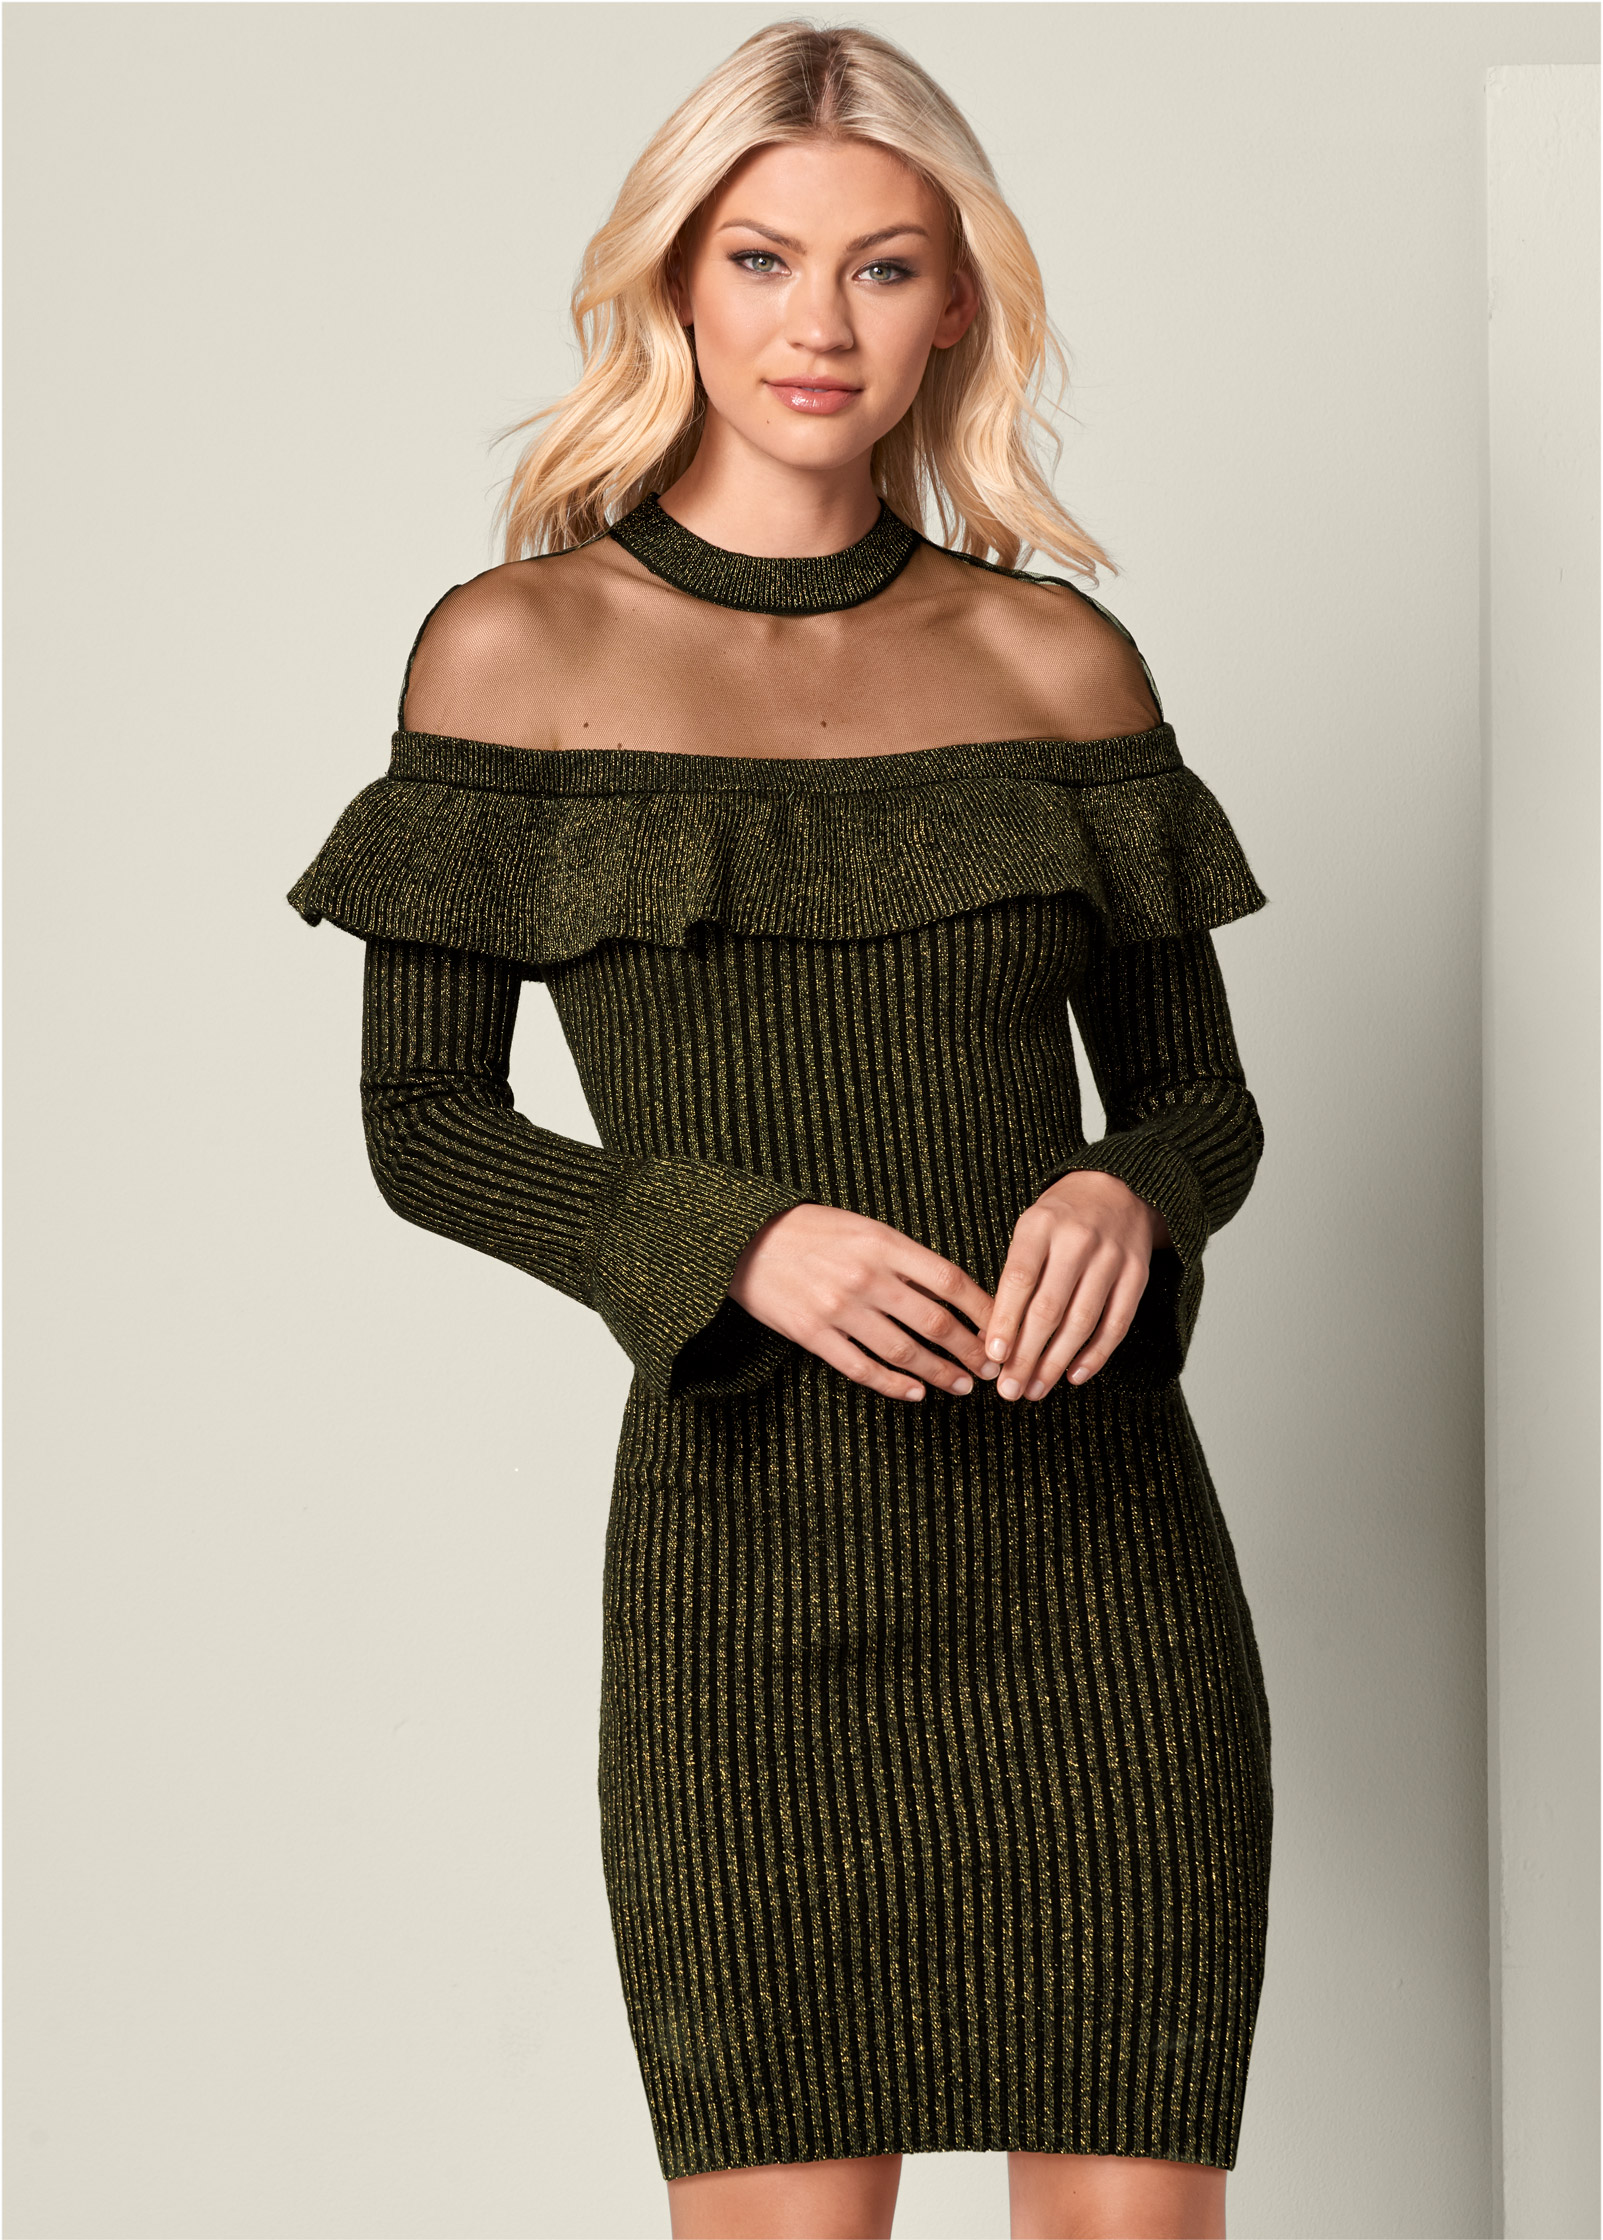 sheer sweater dress